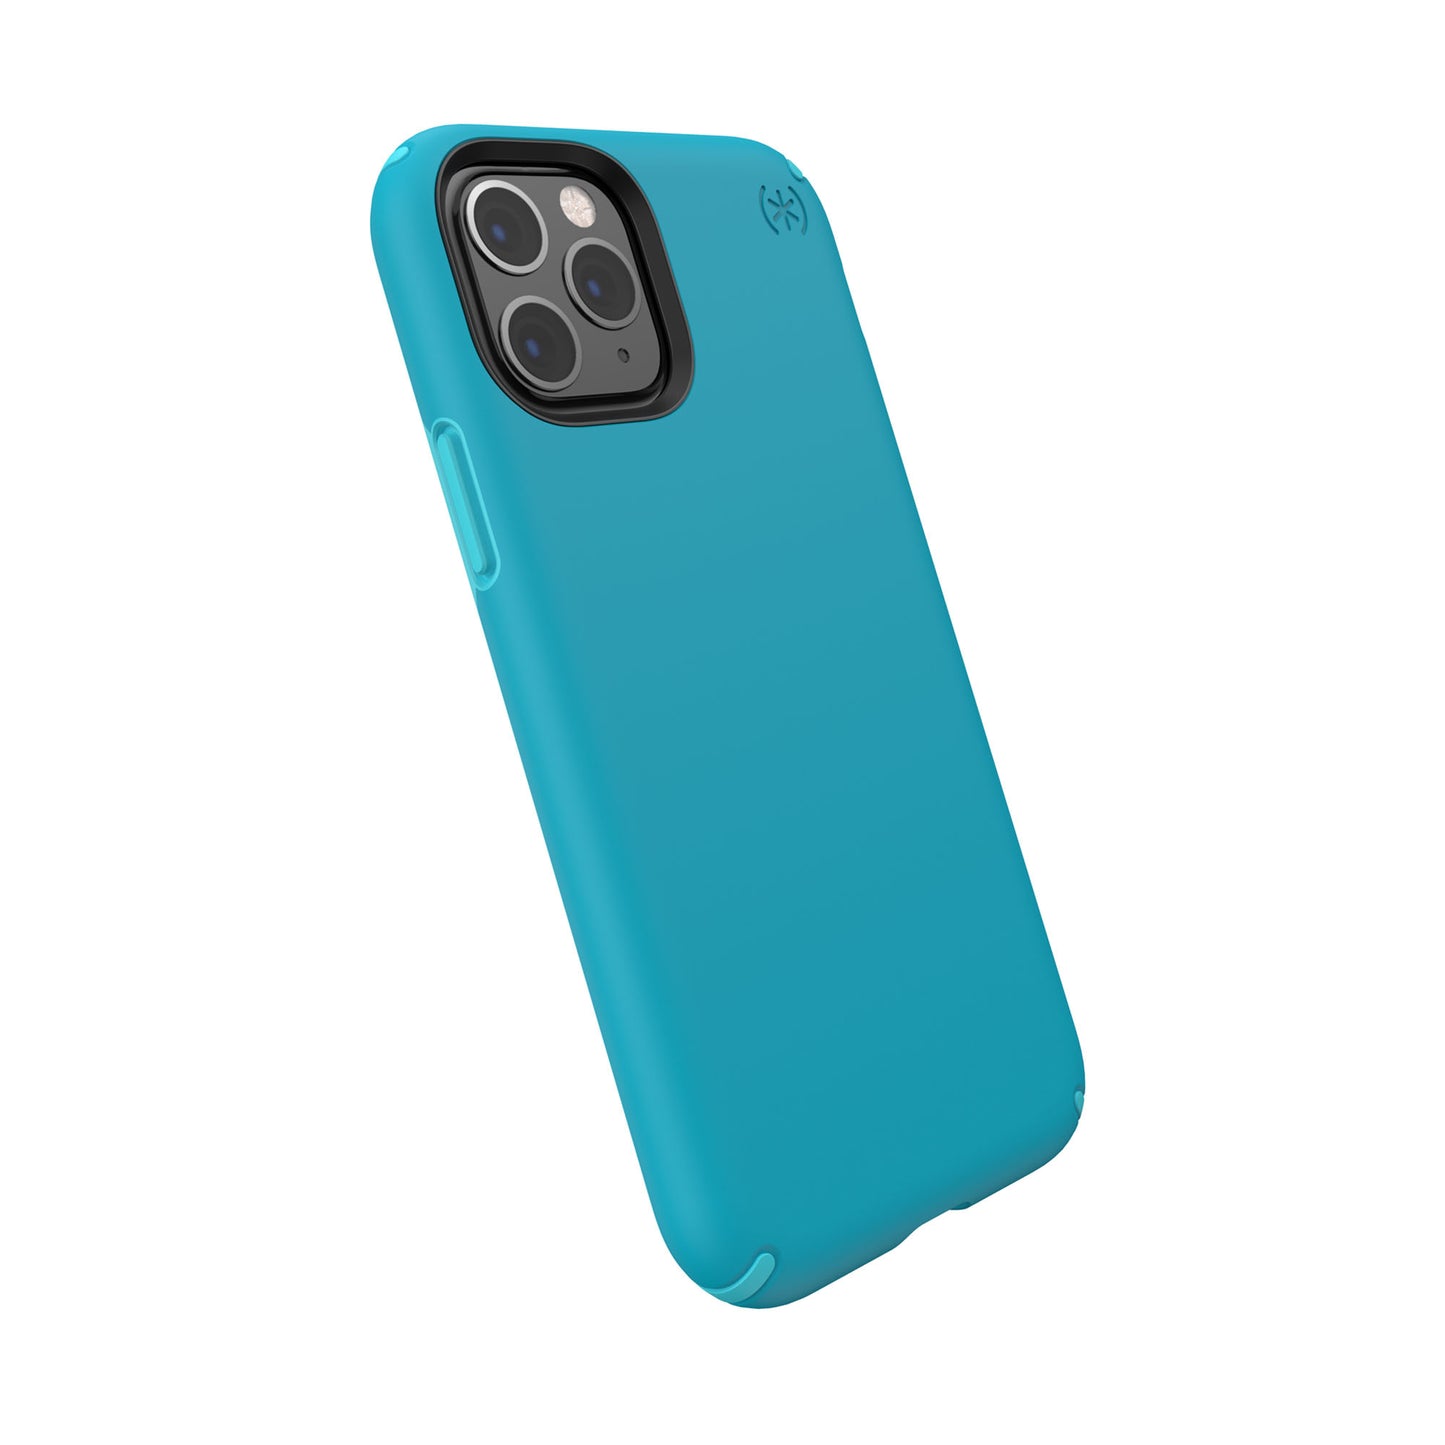 SPECK Presidio Pro Case for iPhone 11 Pro Max - Bali Blue/Skyline Blue